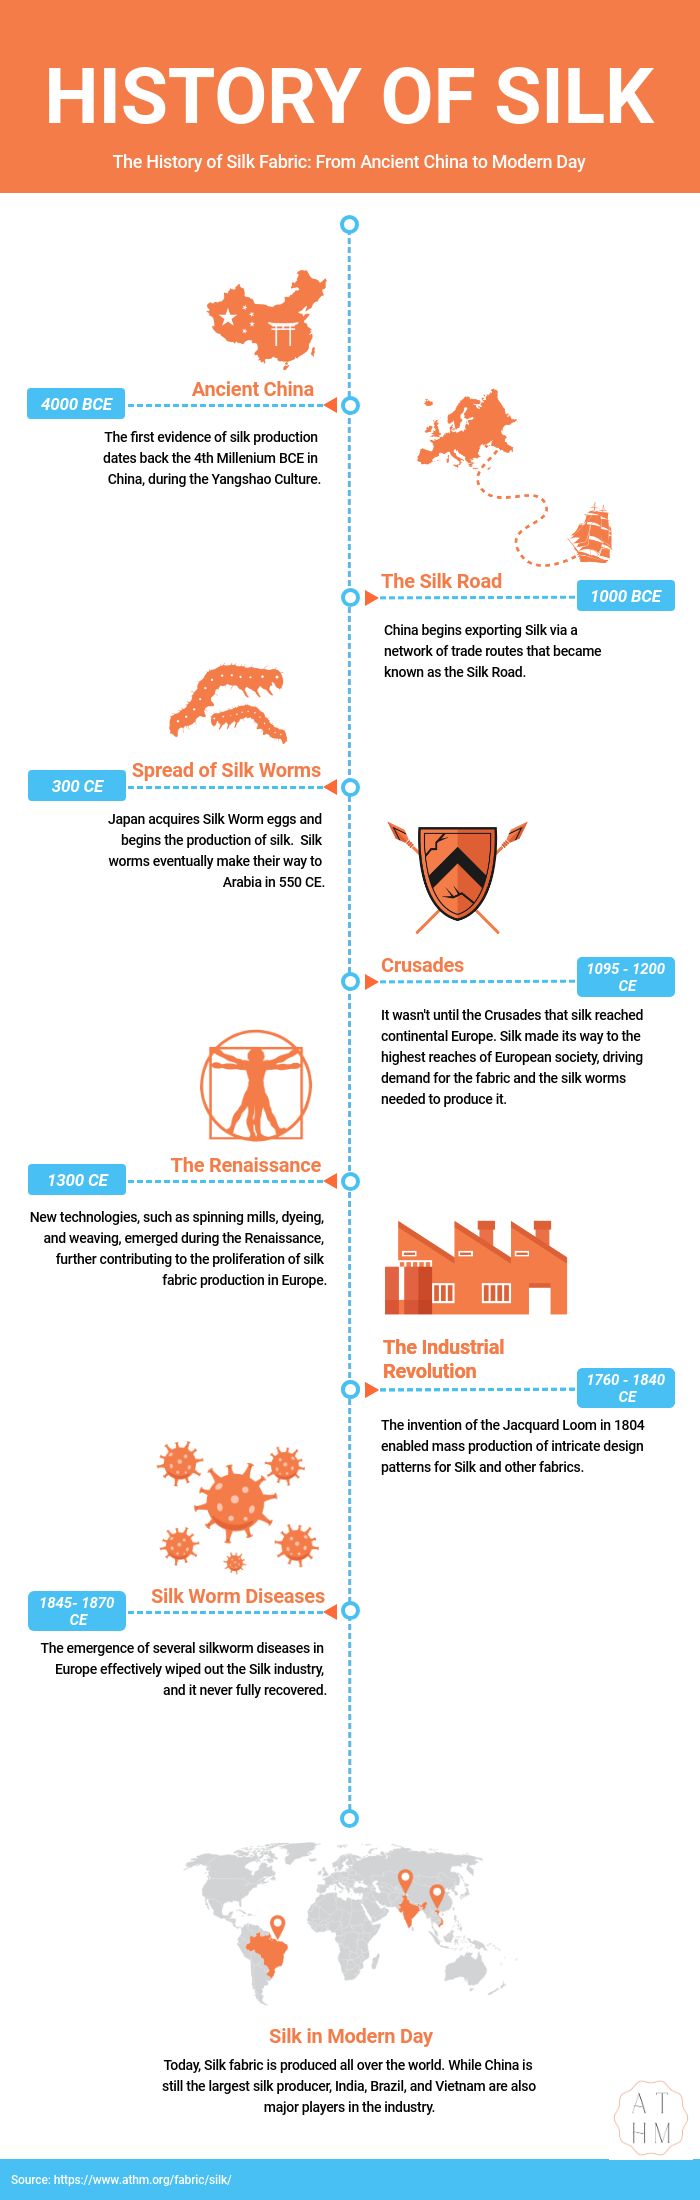 History of Silk Fabric